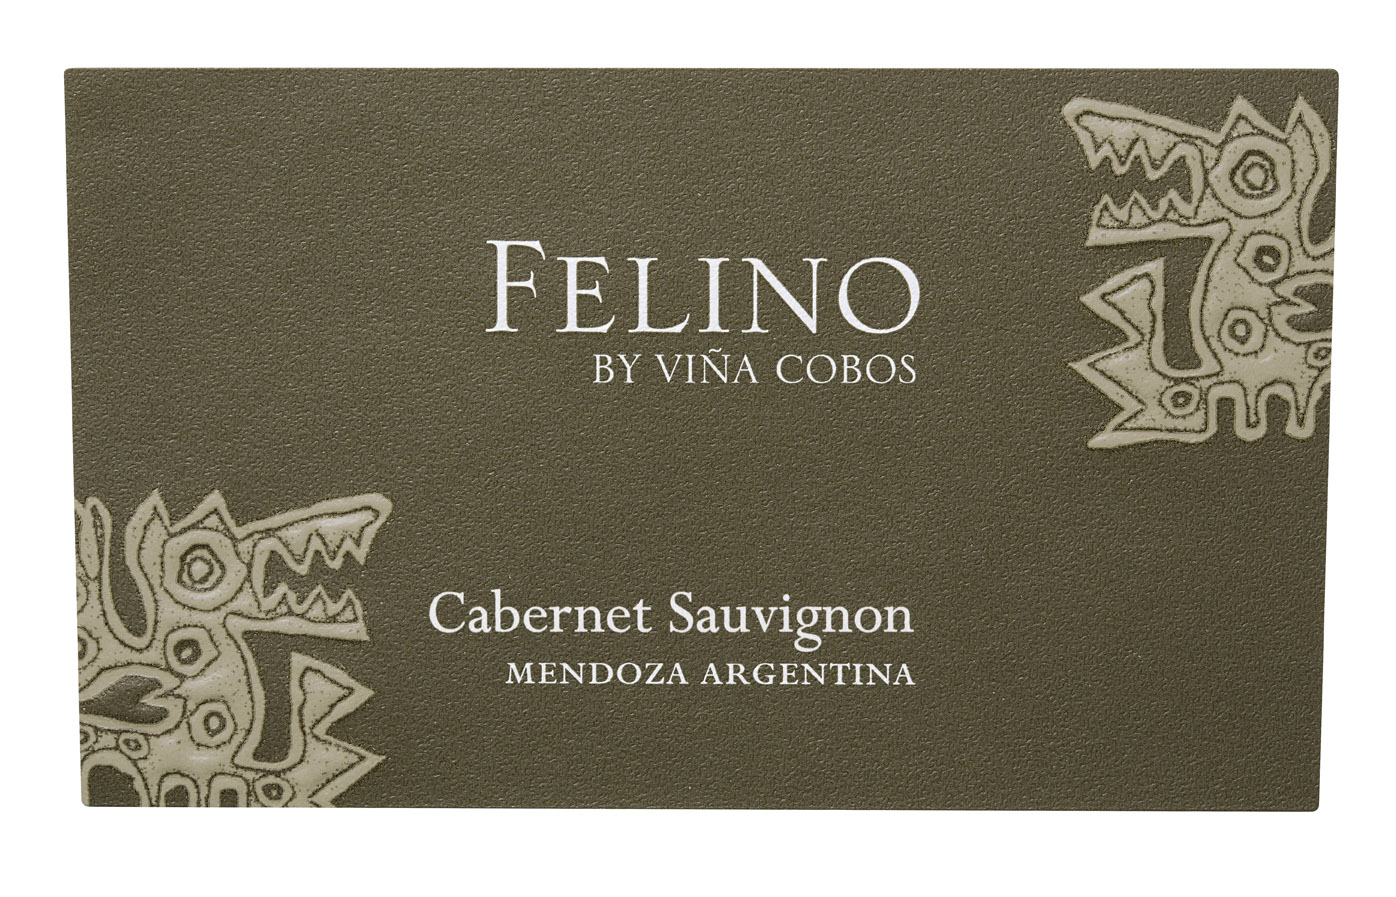 2019 Vina Cobos Felino Cabernet Sauvignon Mendoza - click image for full description